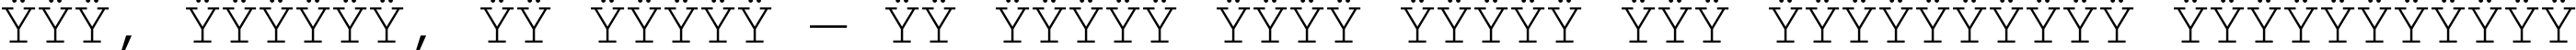 Пример написания шрифтом Courier текста на украинском